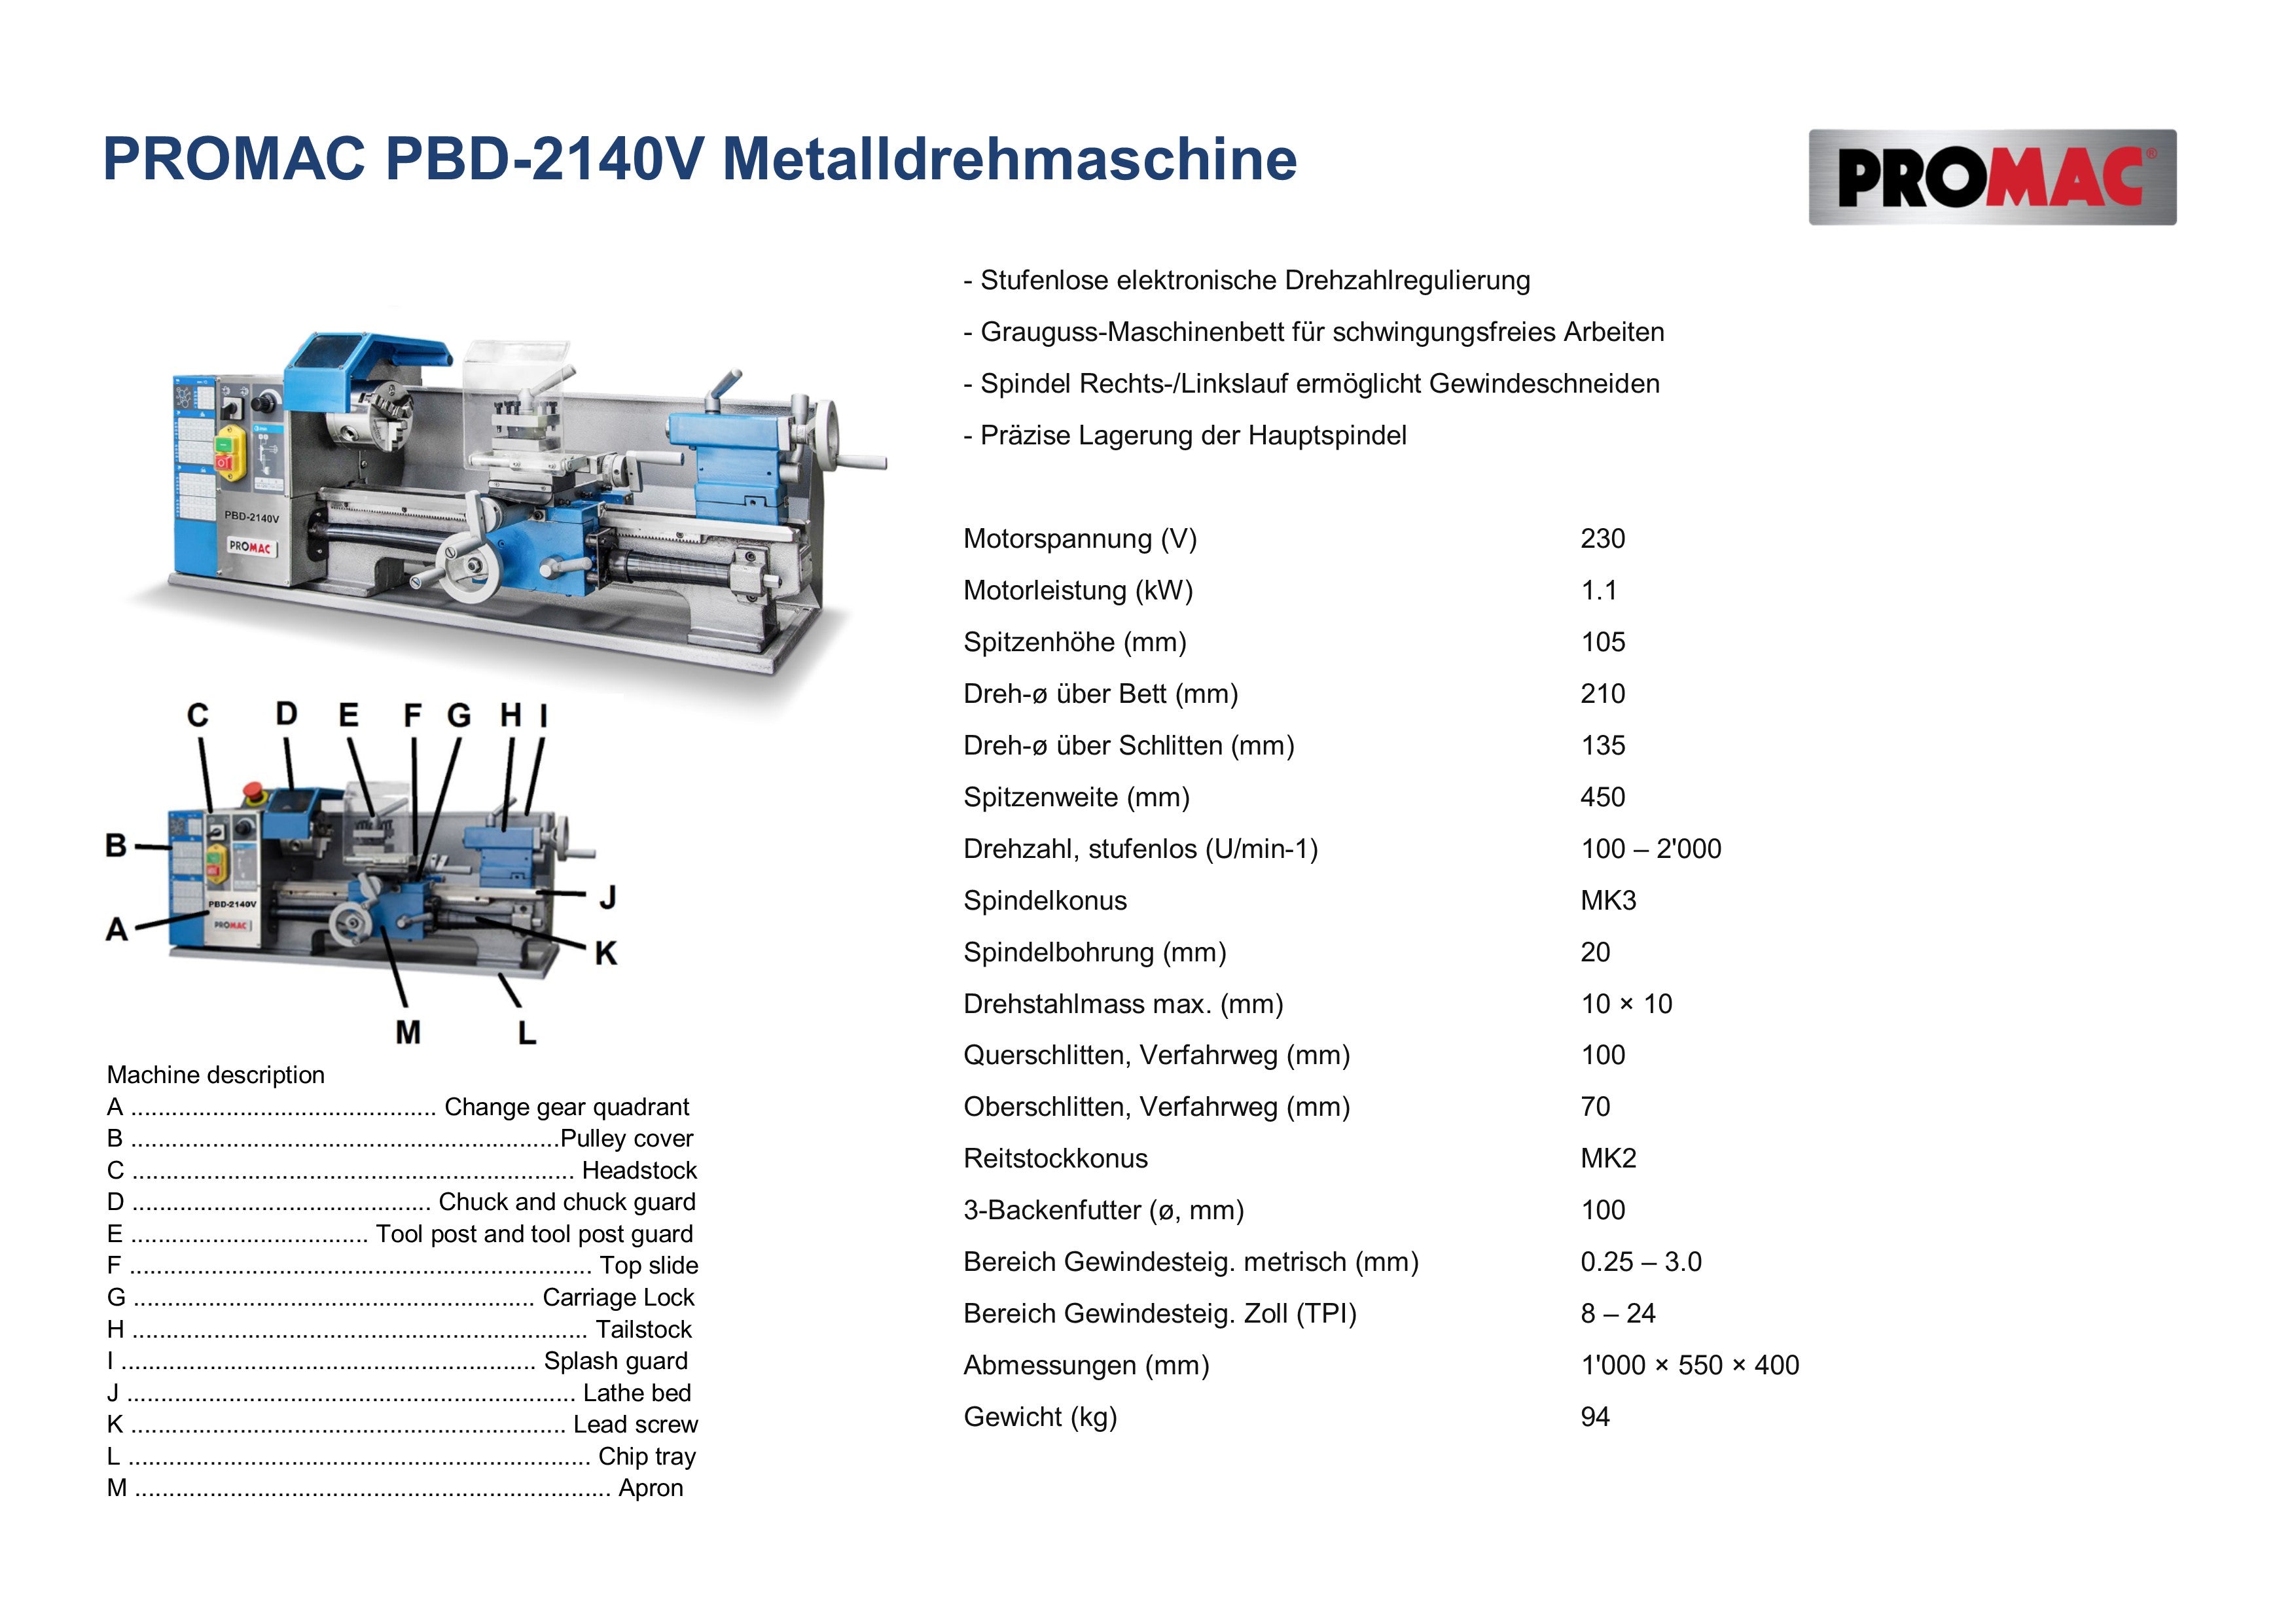 PROMAC METALLDREHBANK PBD-2140V